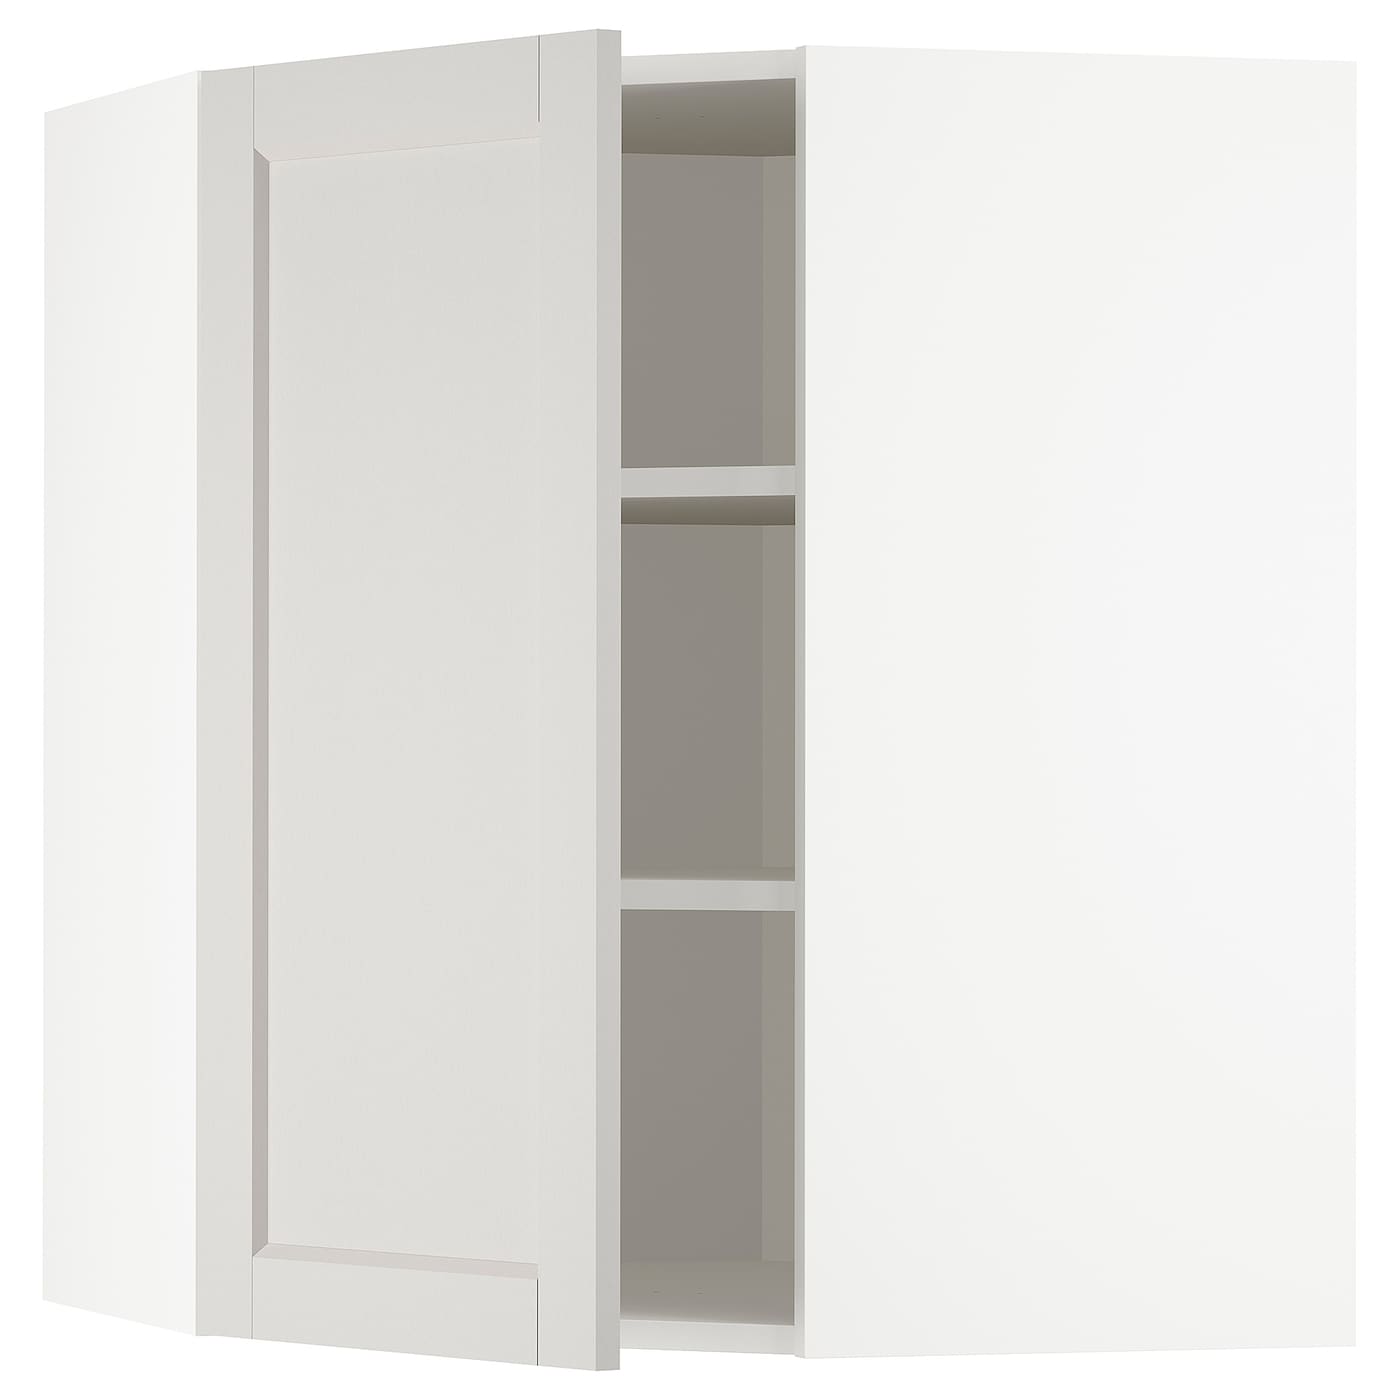 METOD Навесной шкаф - METOD IKEA/ МЕТОД ИКЕА, 80х68 см, белый/светло-серый